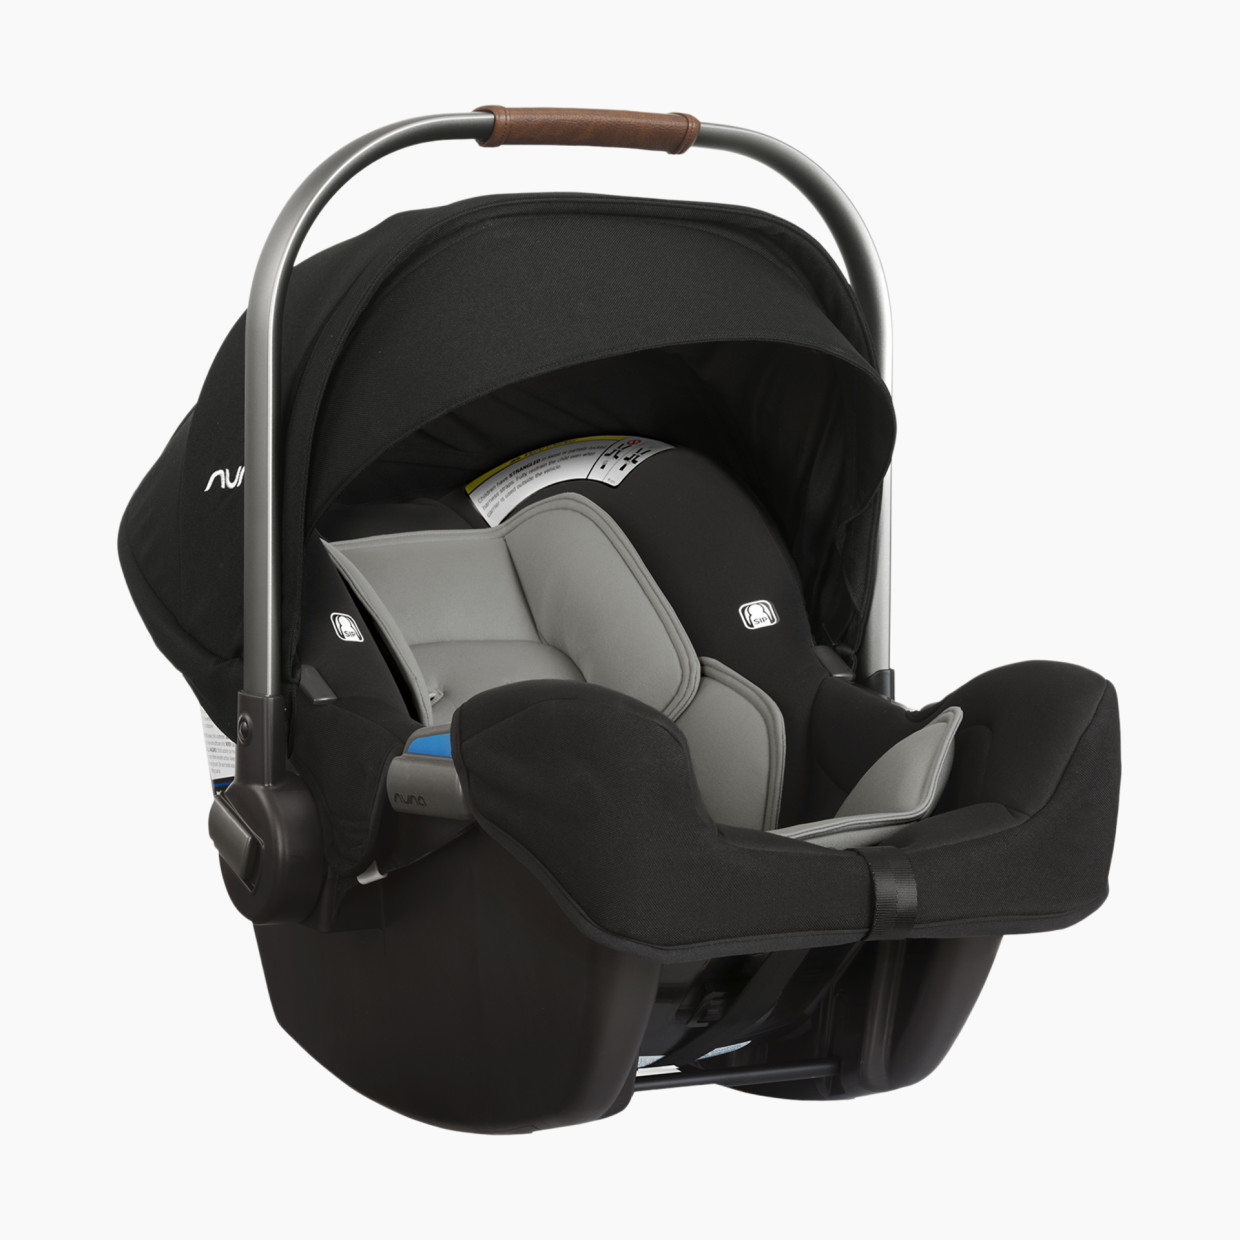 Nuna Pipa Infant Car Seat and Base - Caviar.